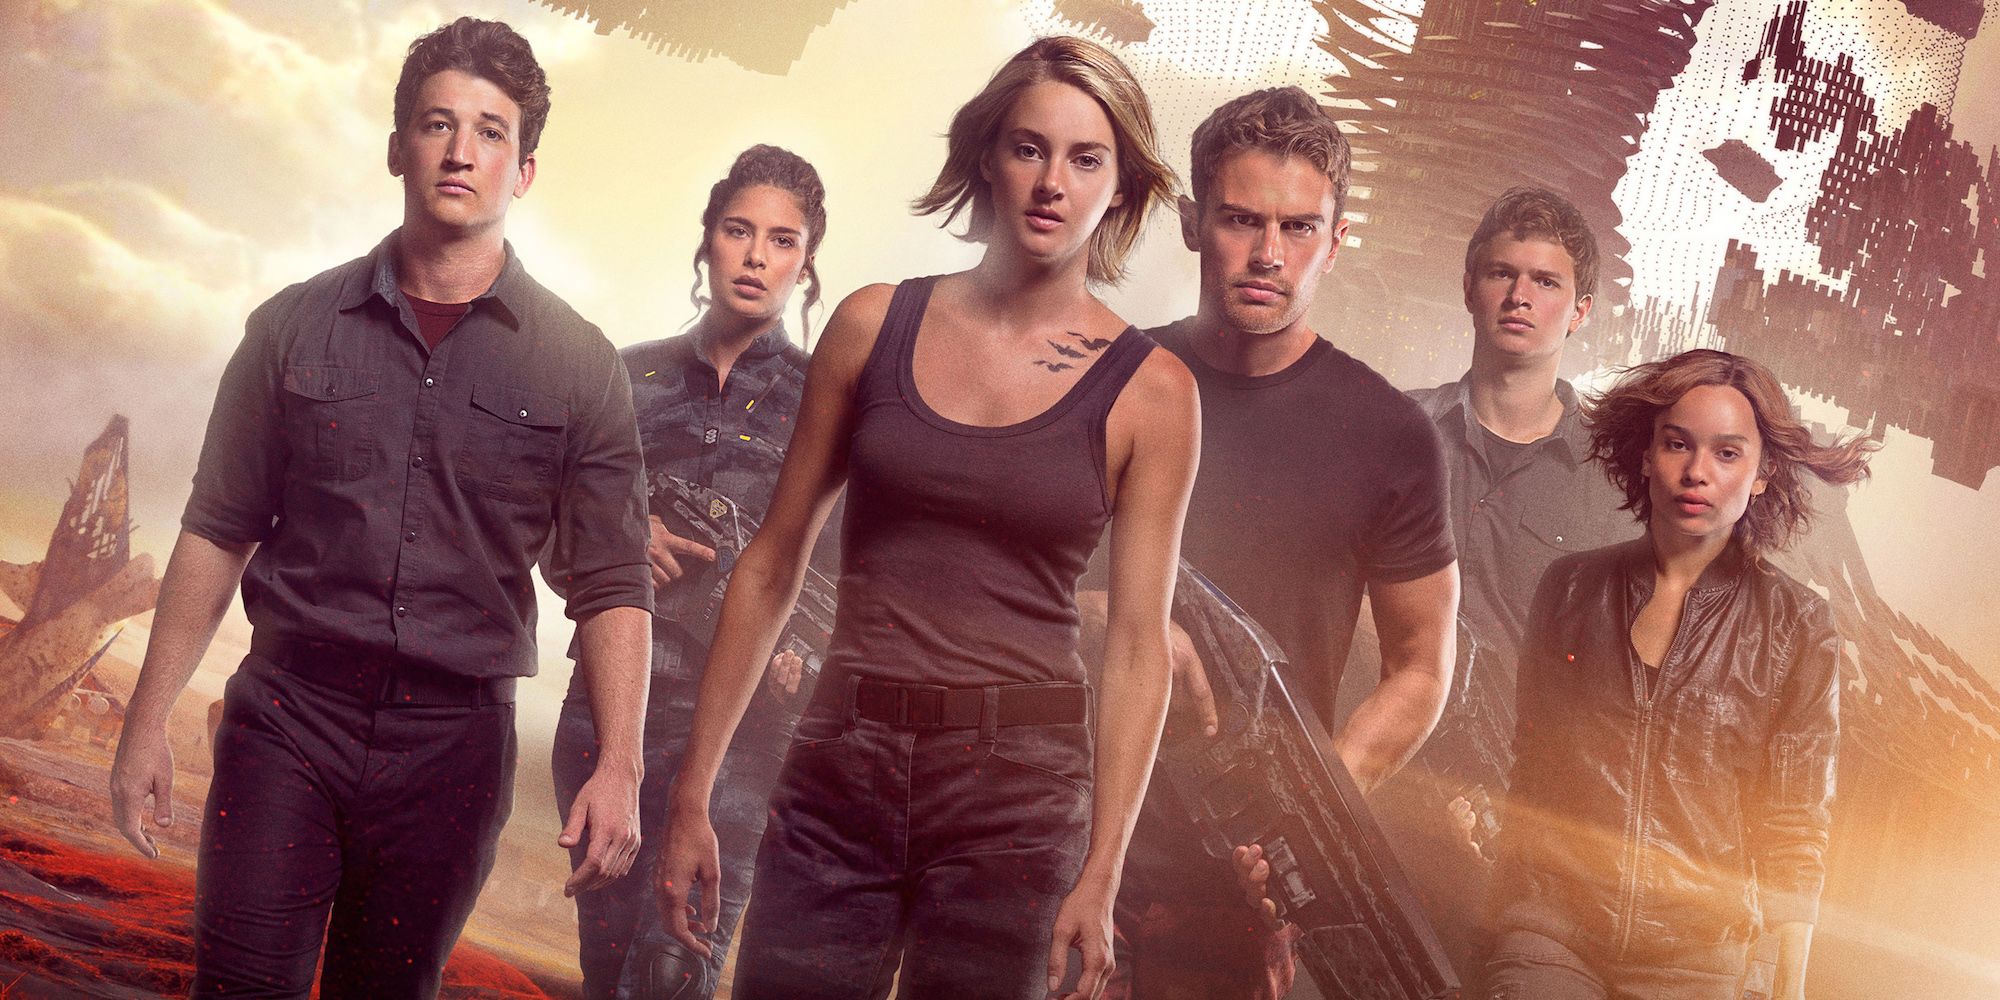 Divergent' author Veronica Roth reveals plans for a 'Chosen Ones' sequel